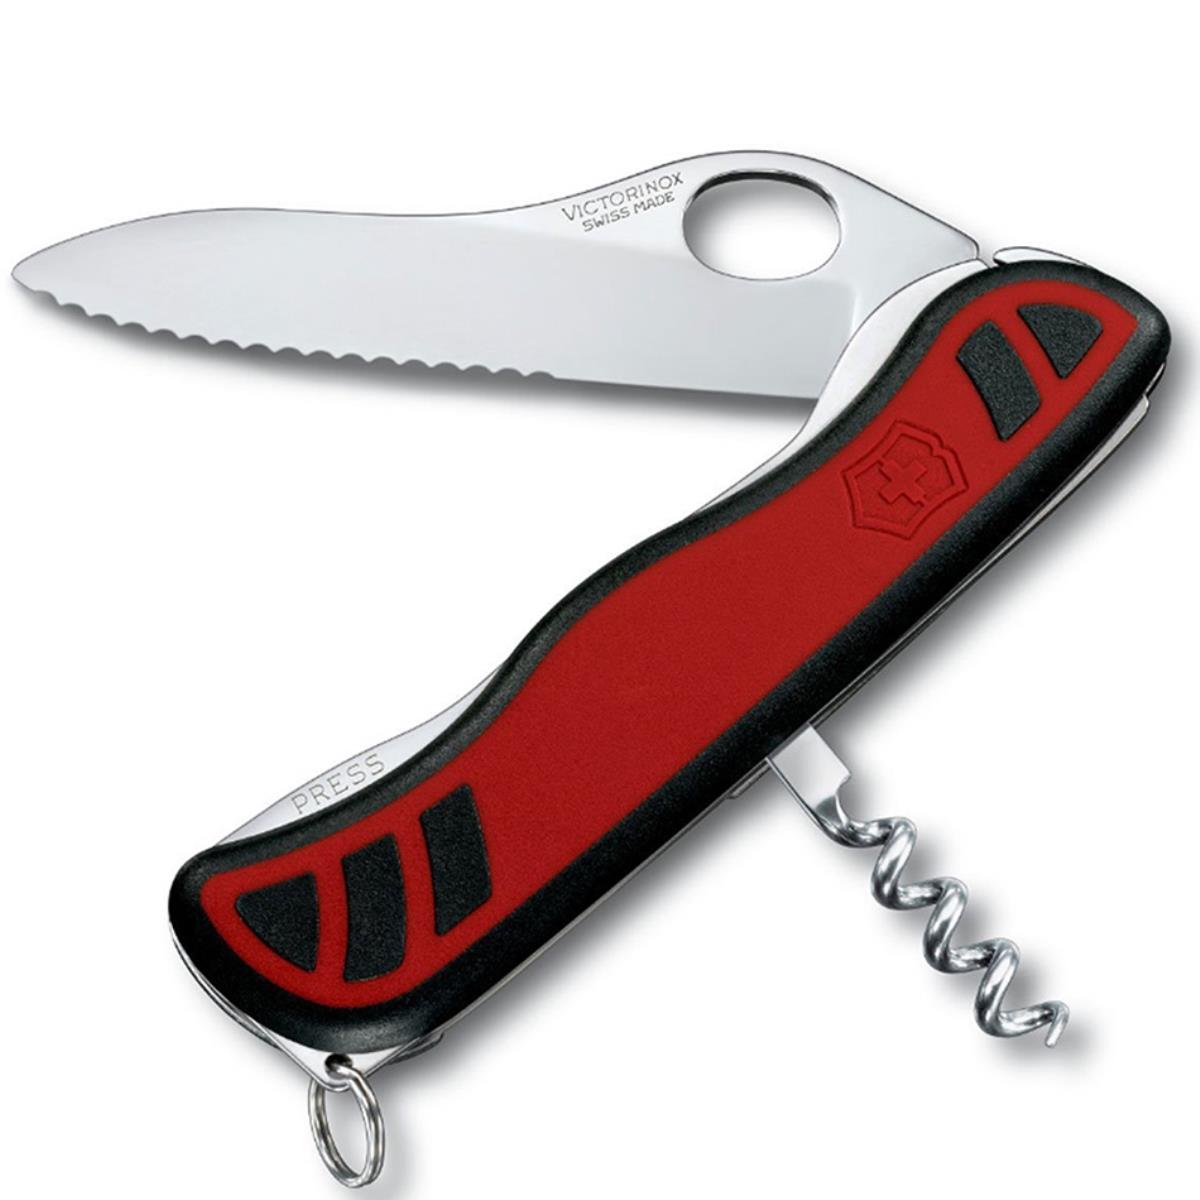 Нож 0.8321. MWC VICTORINOX нож перочинный victorinox trailmaster 0 8461 mwc941 10 функций